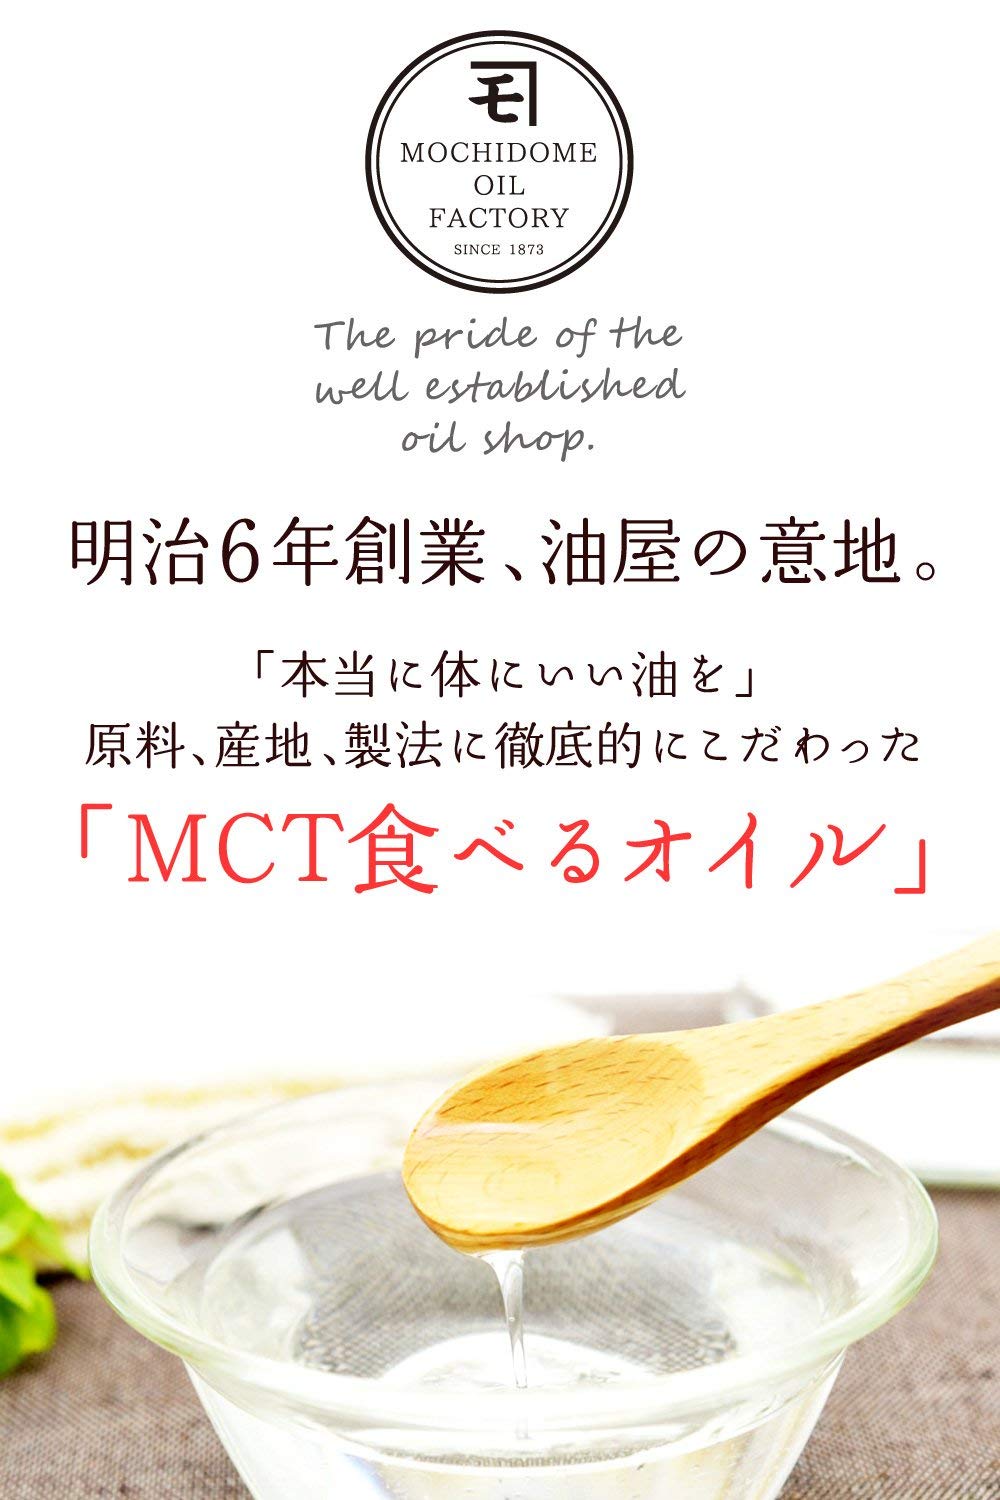 MCT食べるオイル360gフィリピン産ココナッツ由来100%のMCTオイル